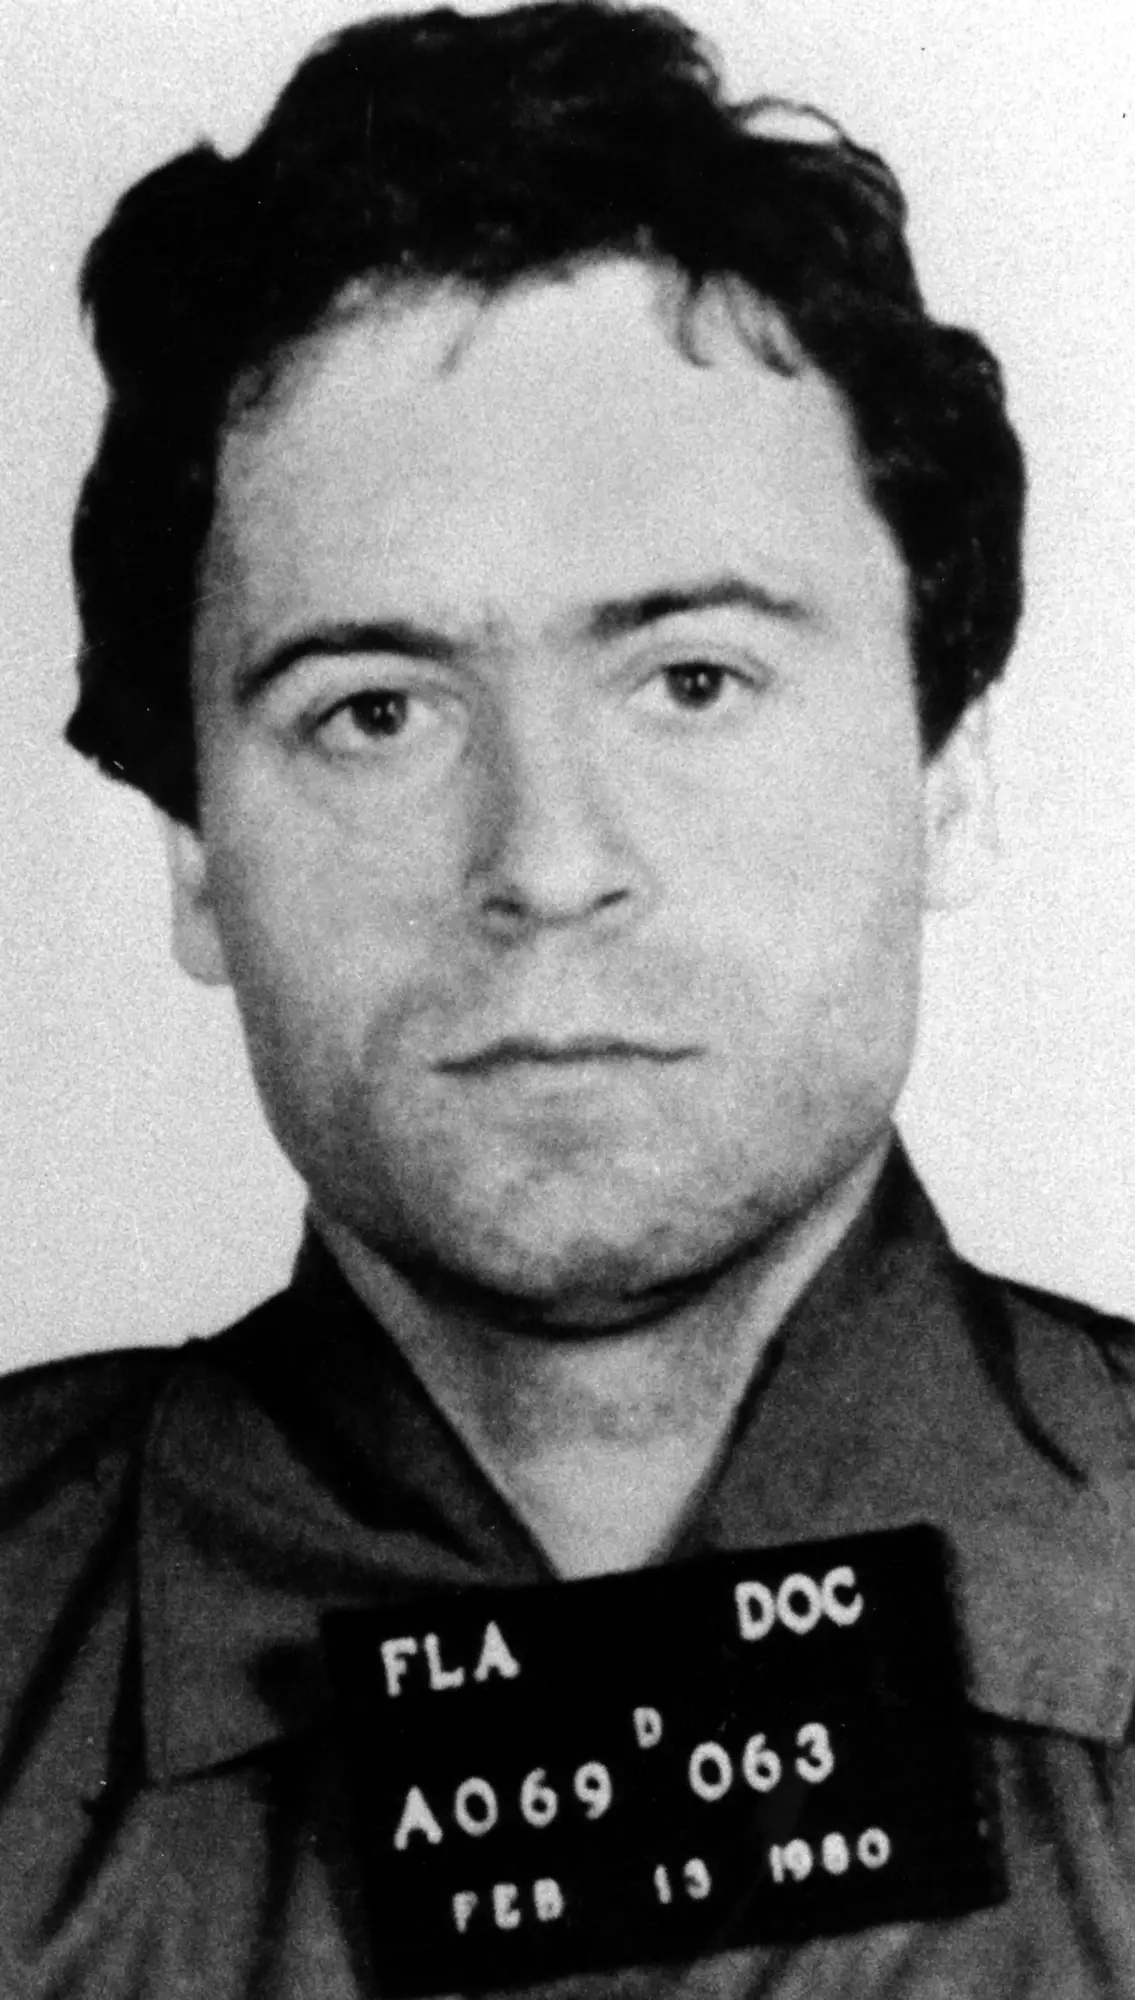 Police mug shot of convicted serial killer Ted Bundy in 1980.